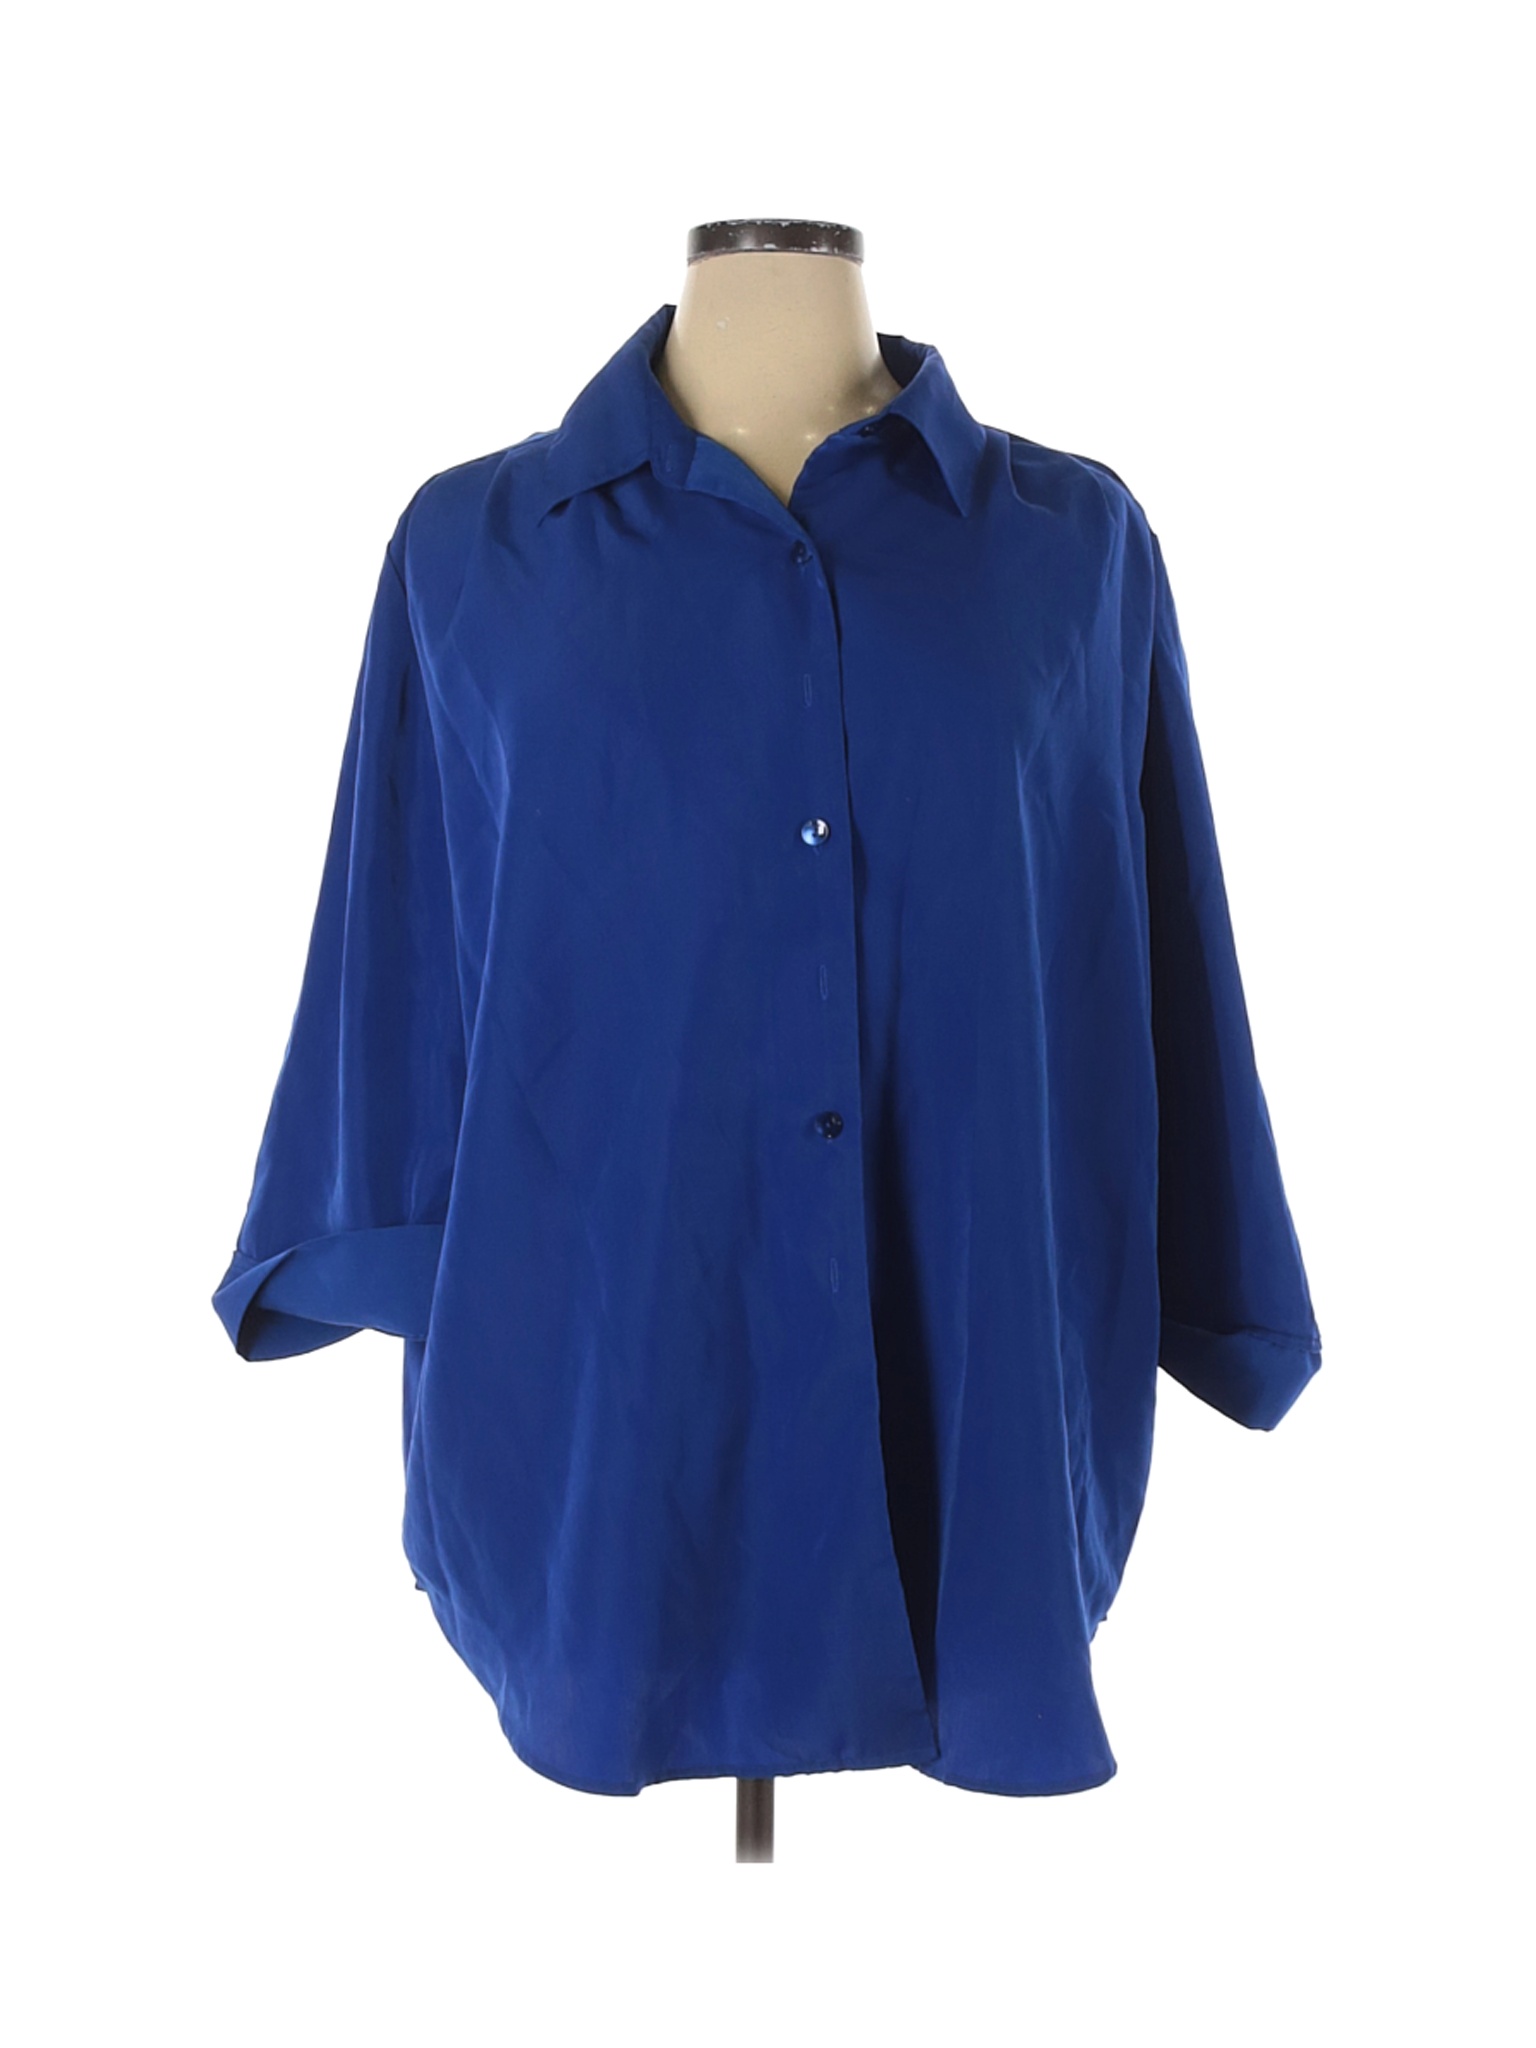 Brylane Woman Collection Women Blue 3/4 Sleeve Blouse 1X Plus | eBay